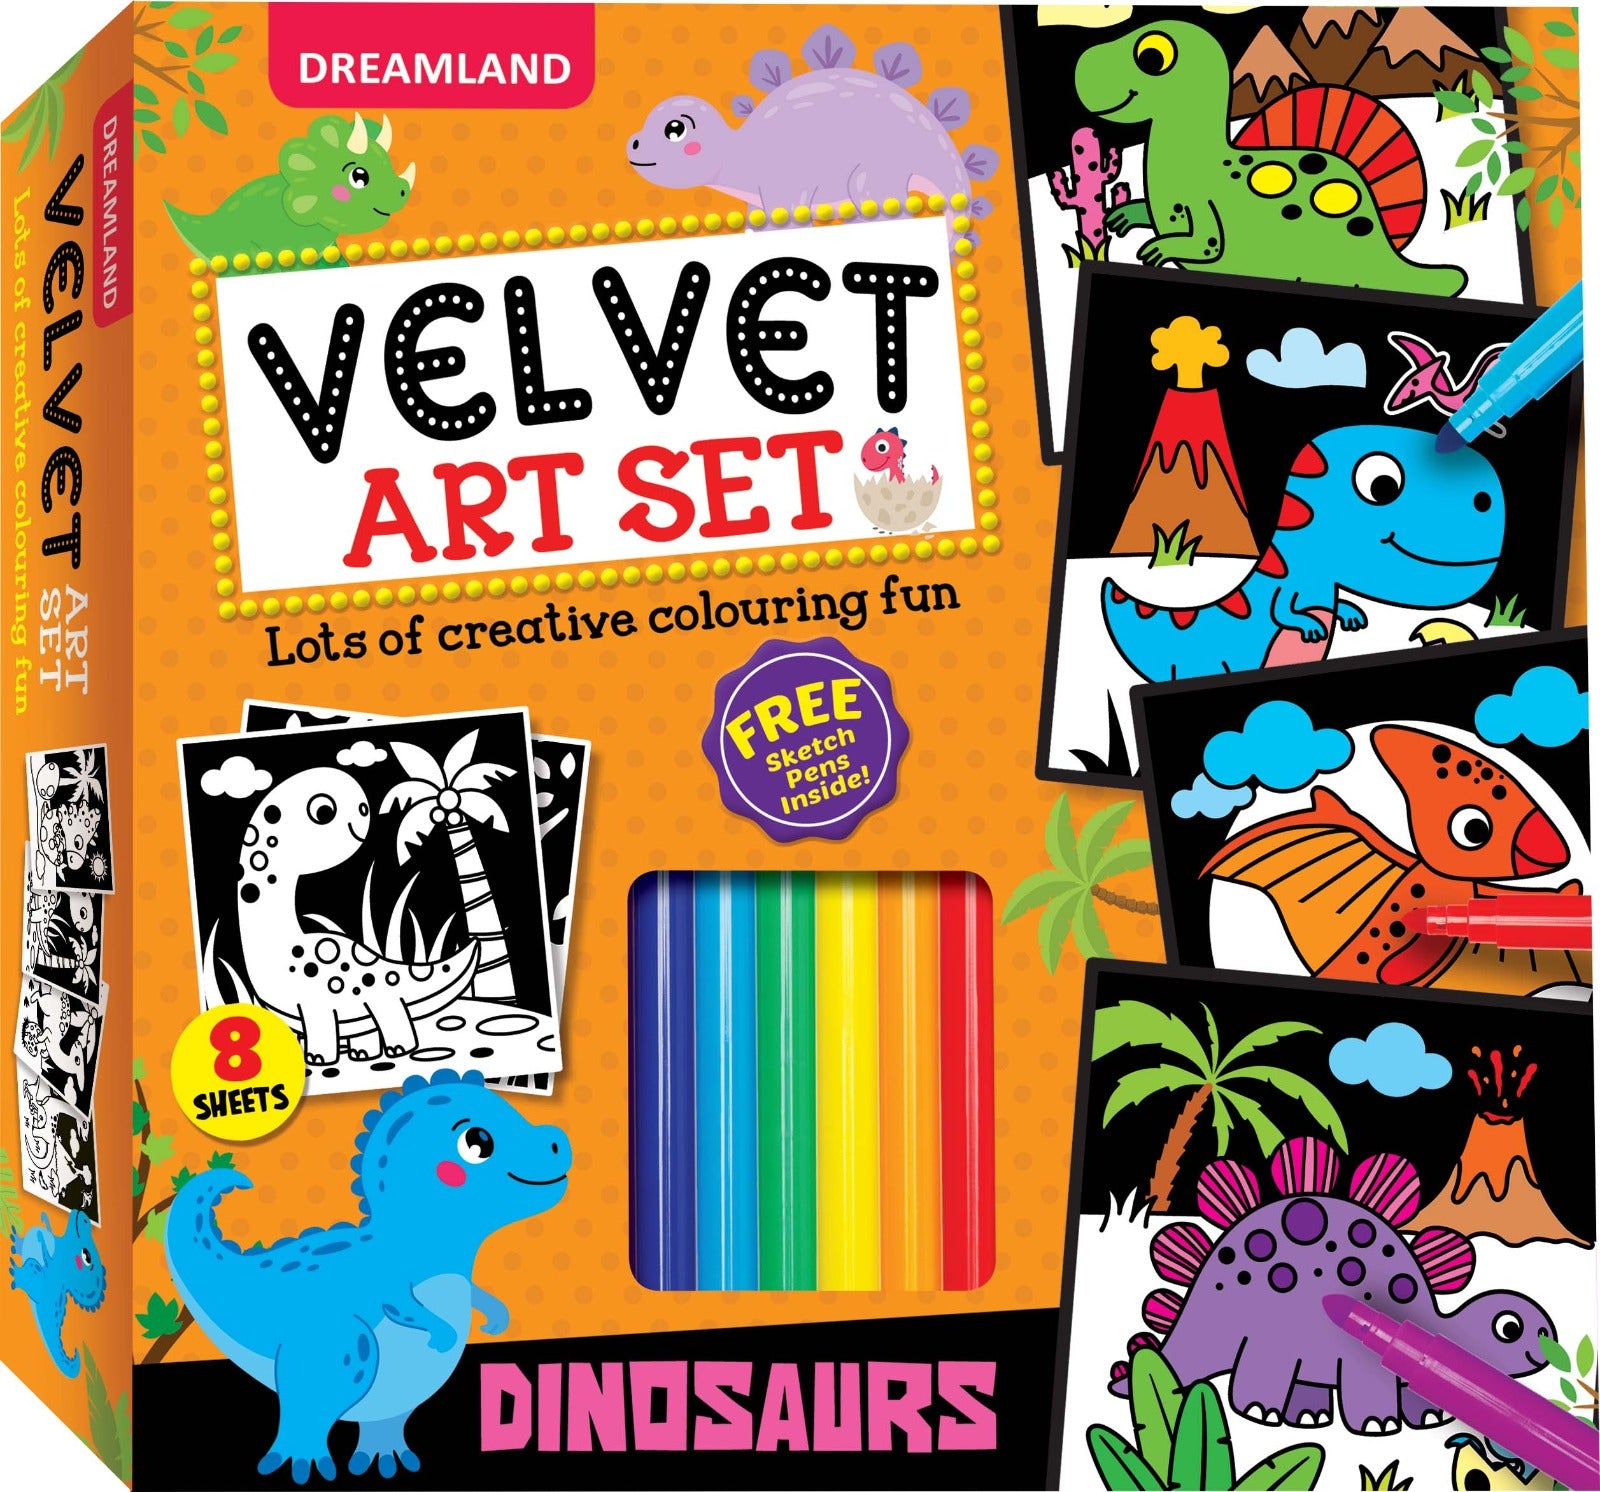 Unicorn - Velvet Art Set With 10 Free Sketch Pens